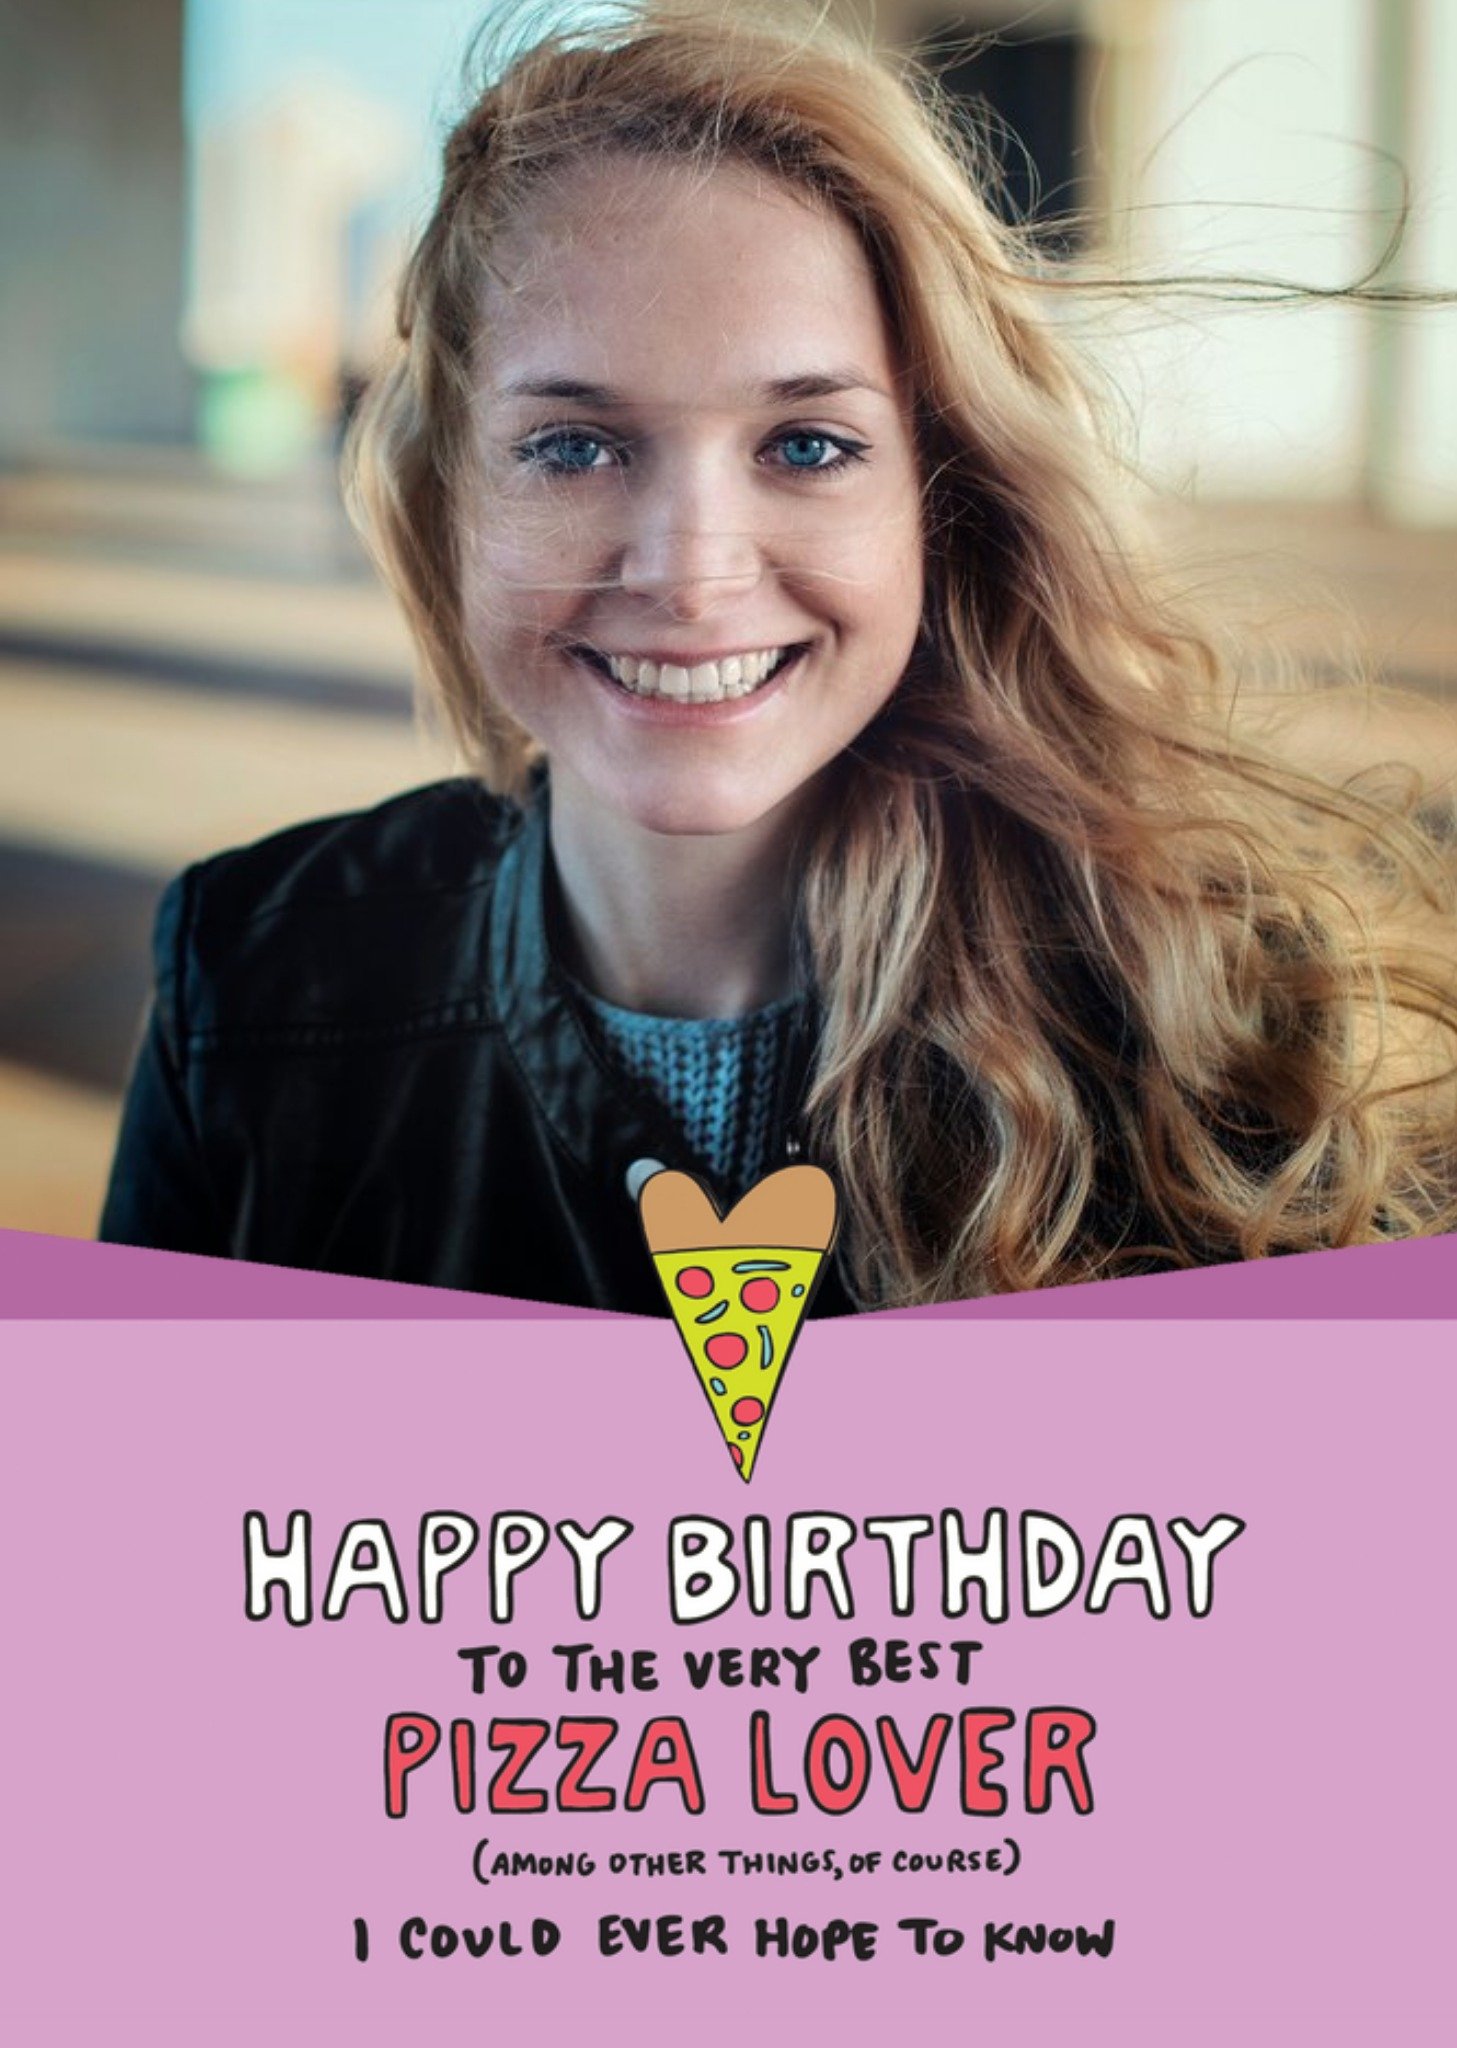 Moonpig Angela Chick Happy Birthday Pizza Lover Photo Upload Birthday Card, Large